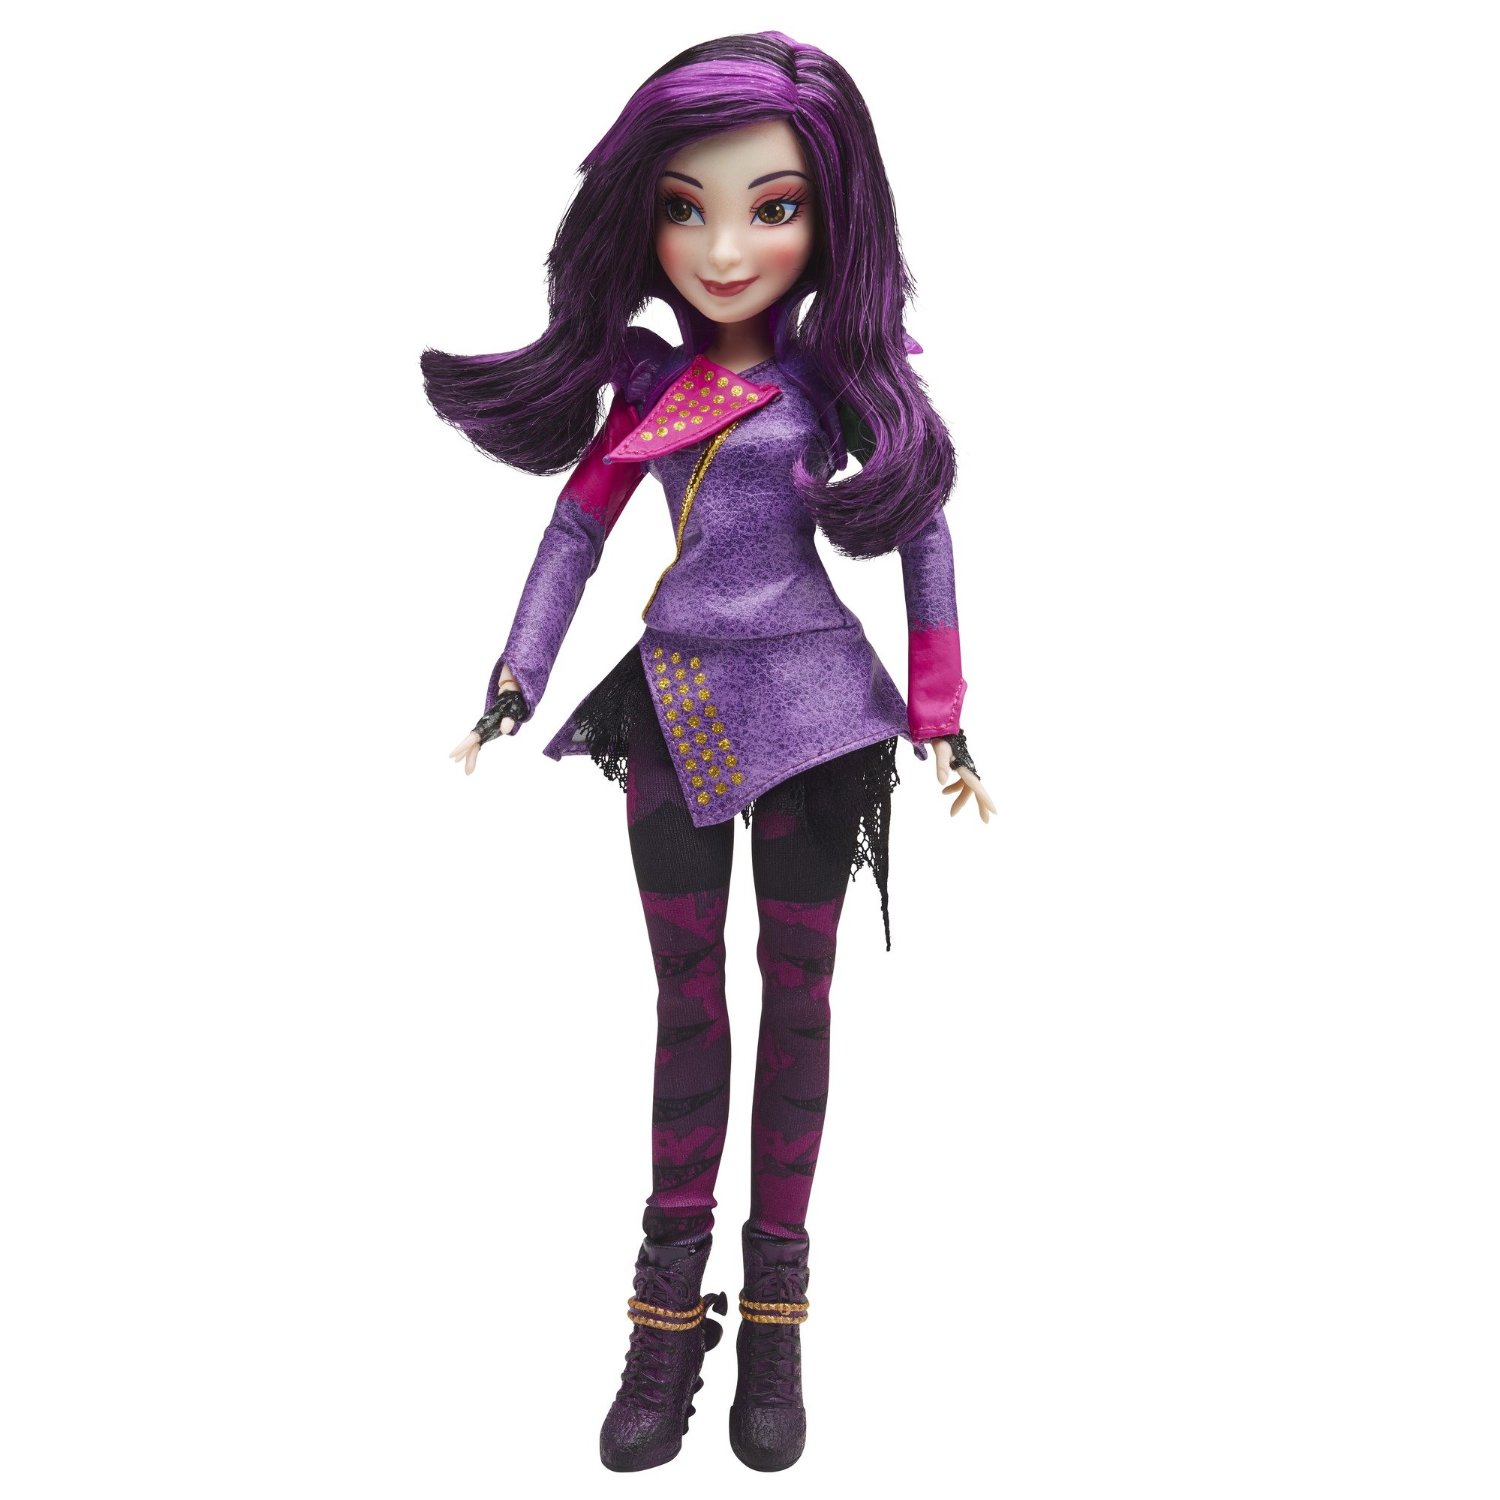 Disney Descendants Villain Mal, Daughter of Maleficent - Epic Kids Toys